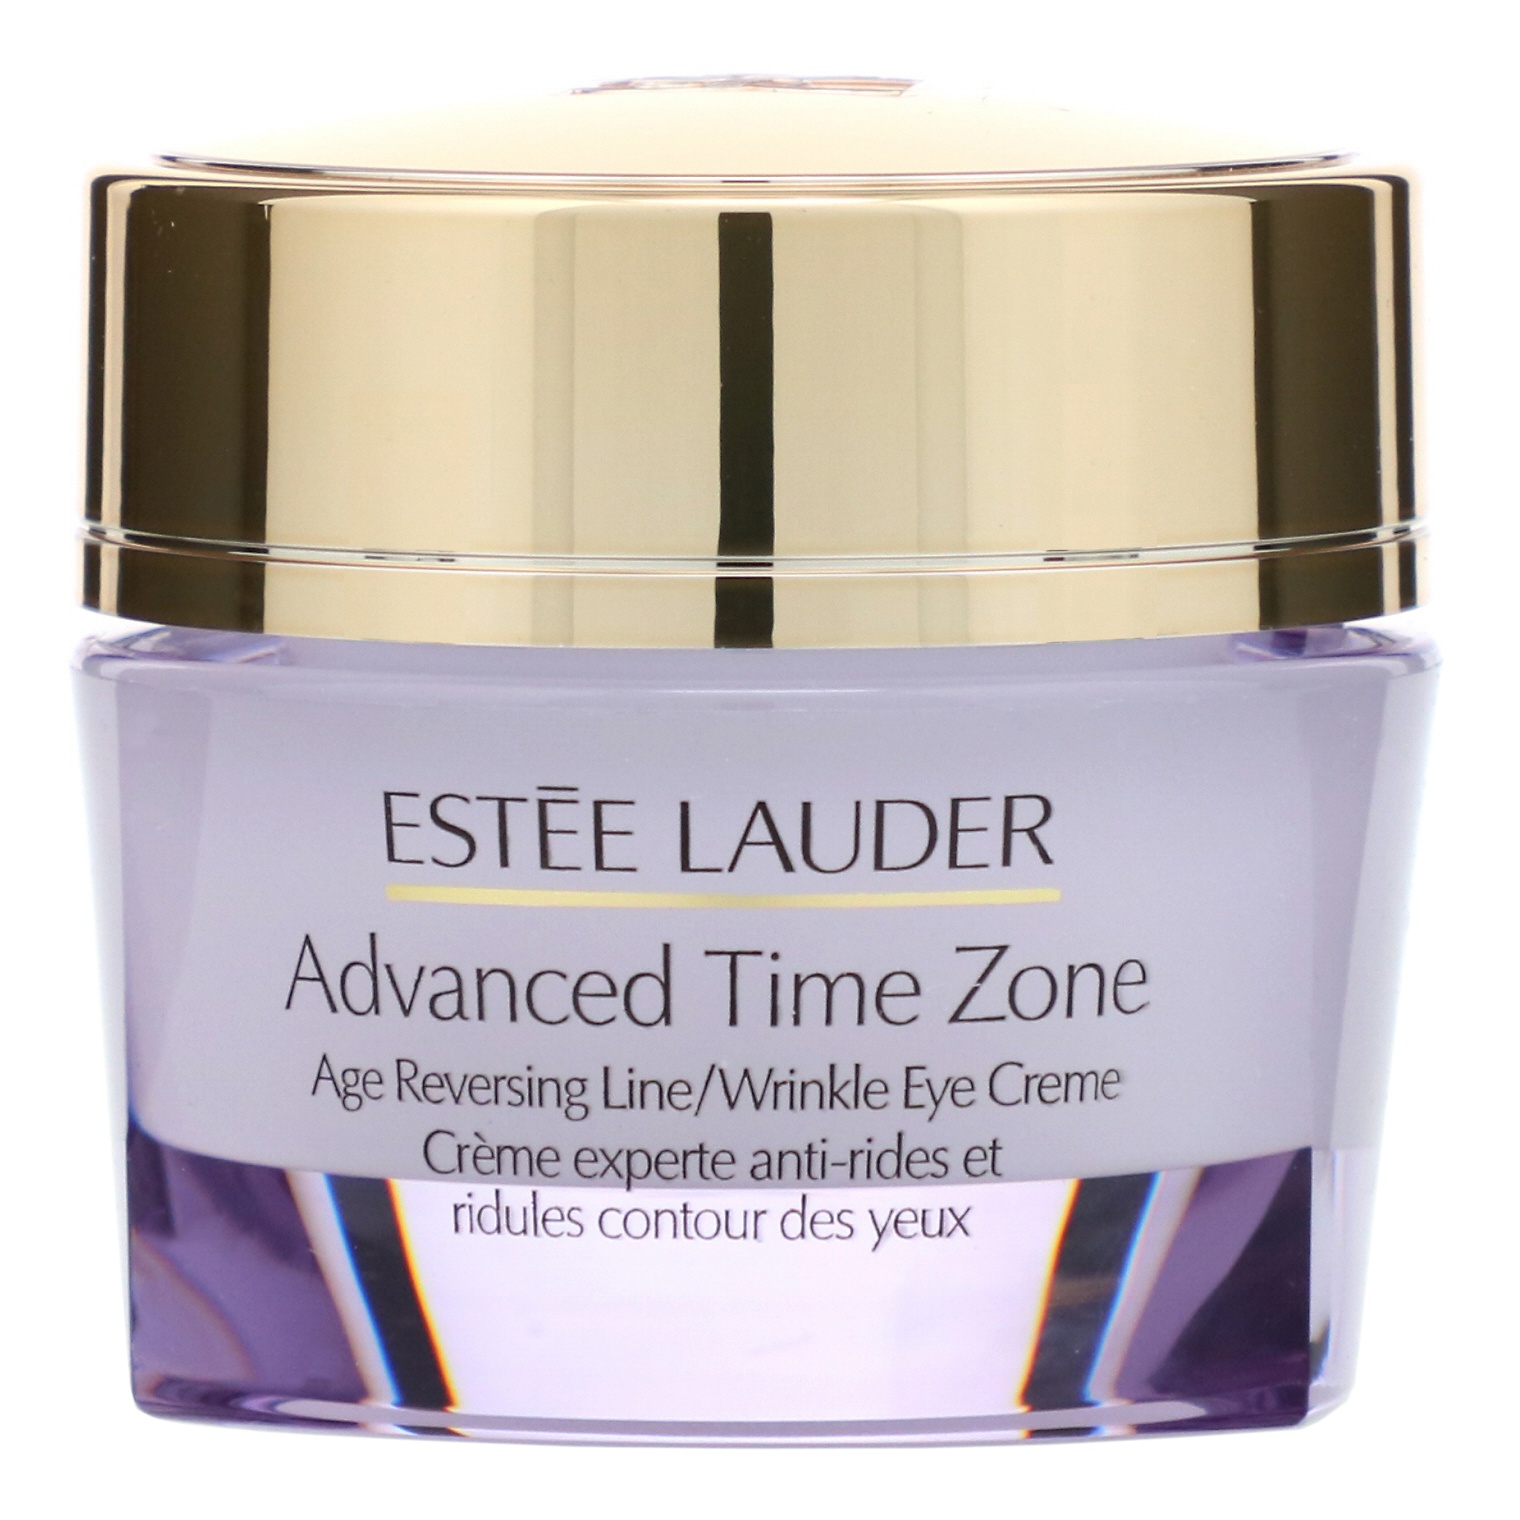 Estée Lauder Advanced Time Zone Age Reversing Line/Wrinkle Eye Creme